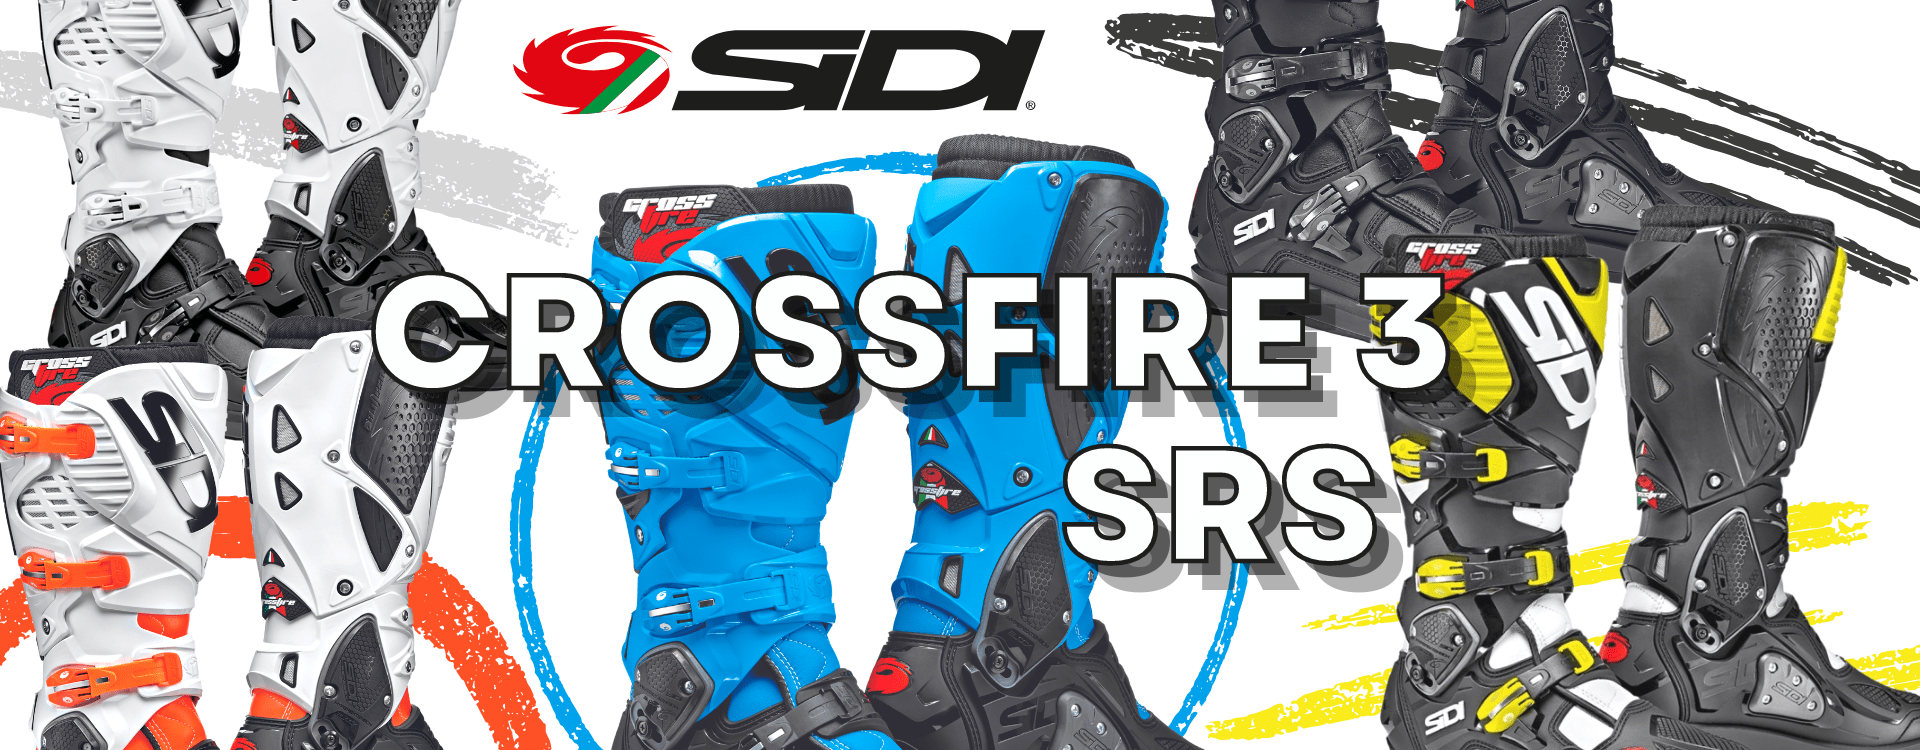 Sidi - Crossfire 3 SRS motoros offroad csizma